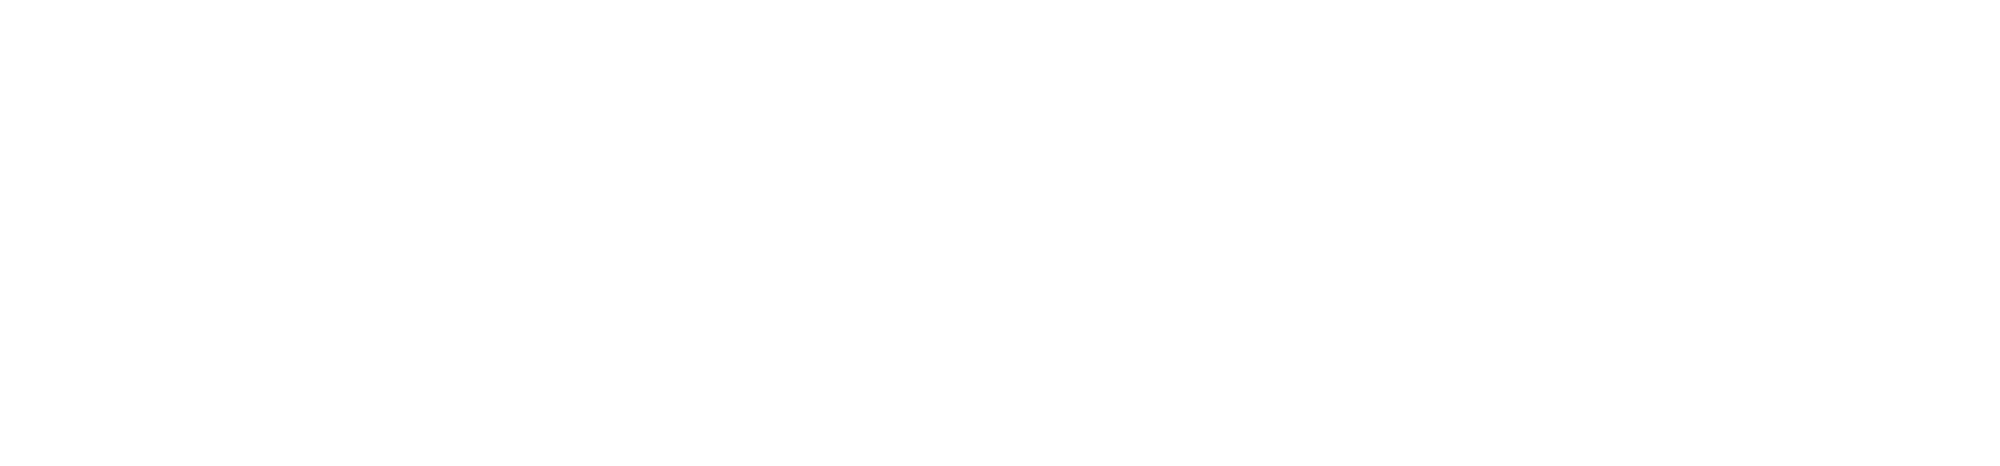 Molson_Coors_Beverage_Company_logo png